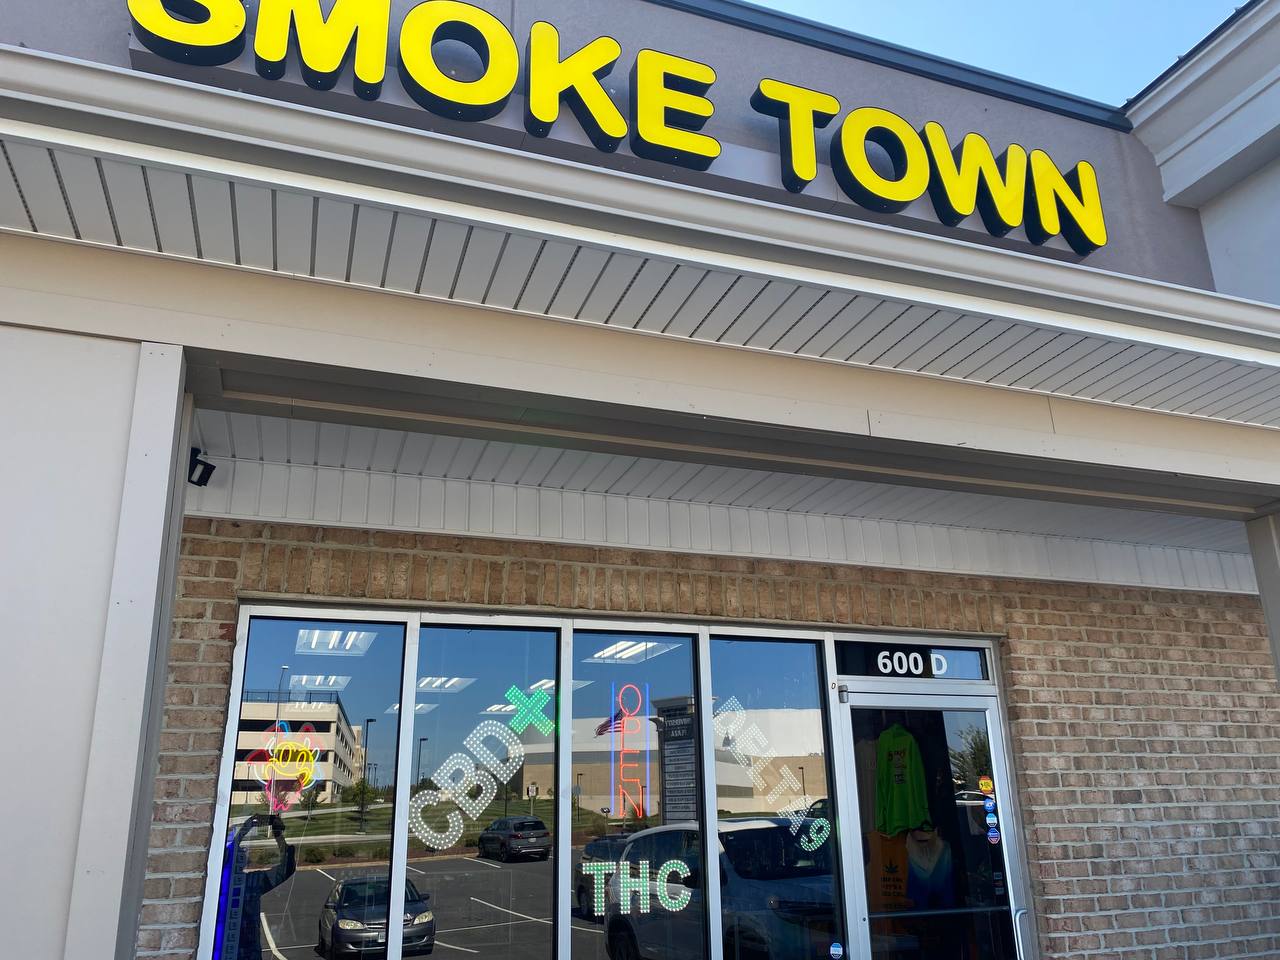 Getcoins - Bitcoin ATM - Inside of Smoke Town in Harrisonburg, Virginia